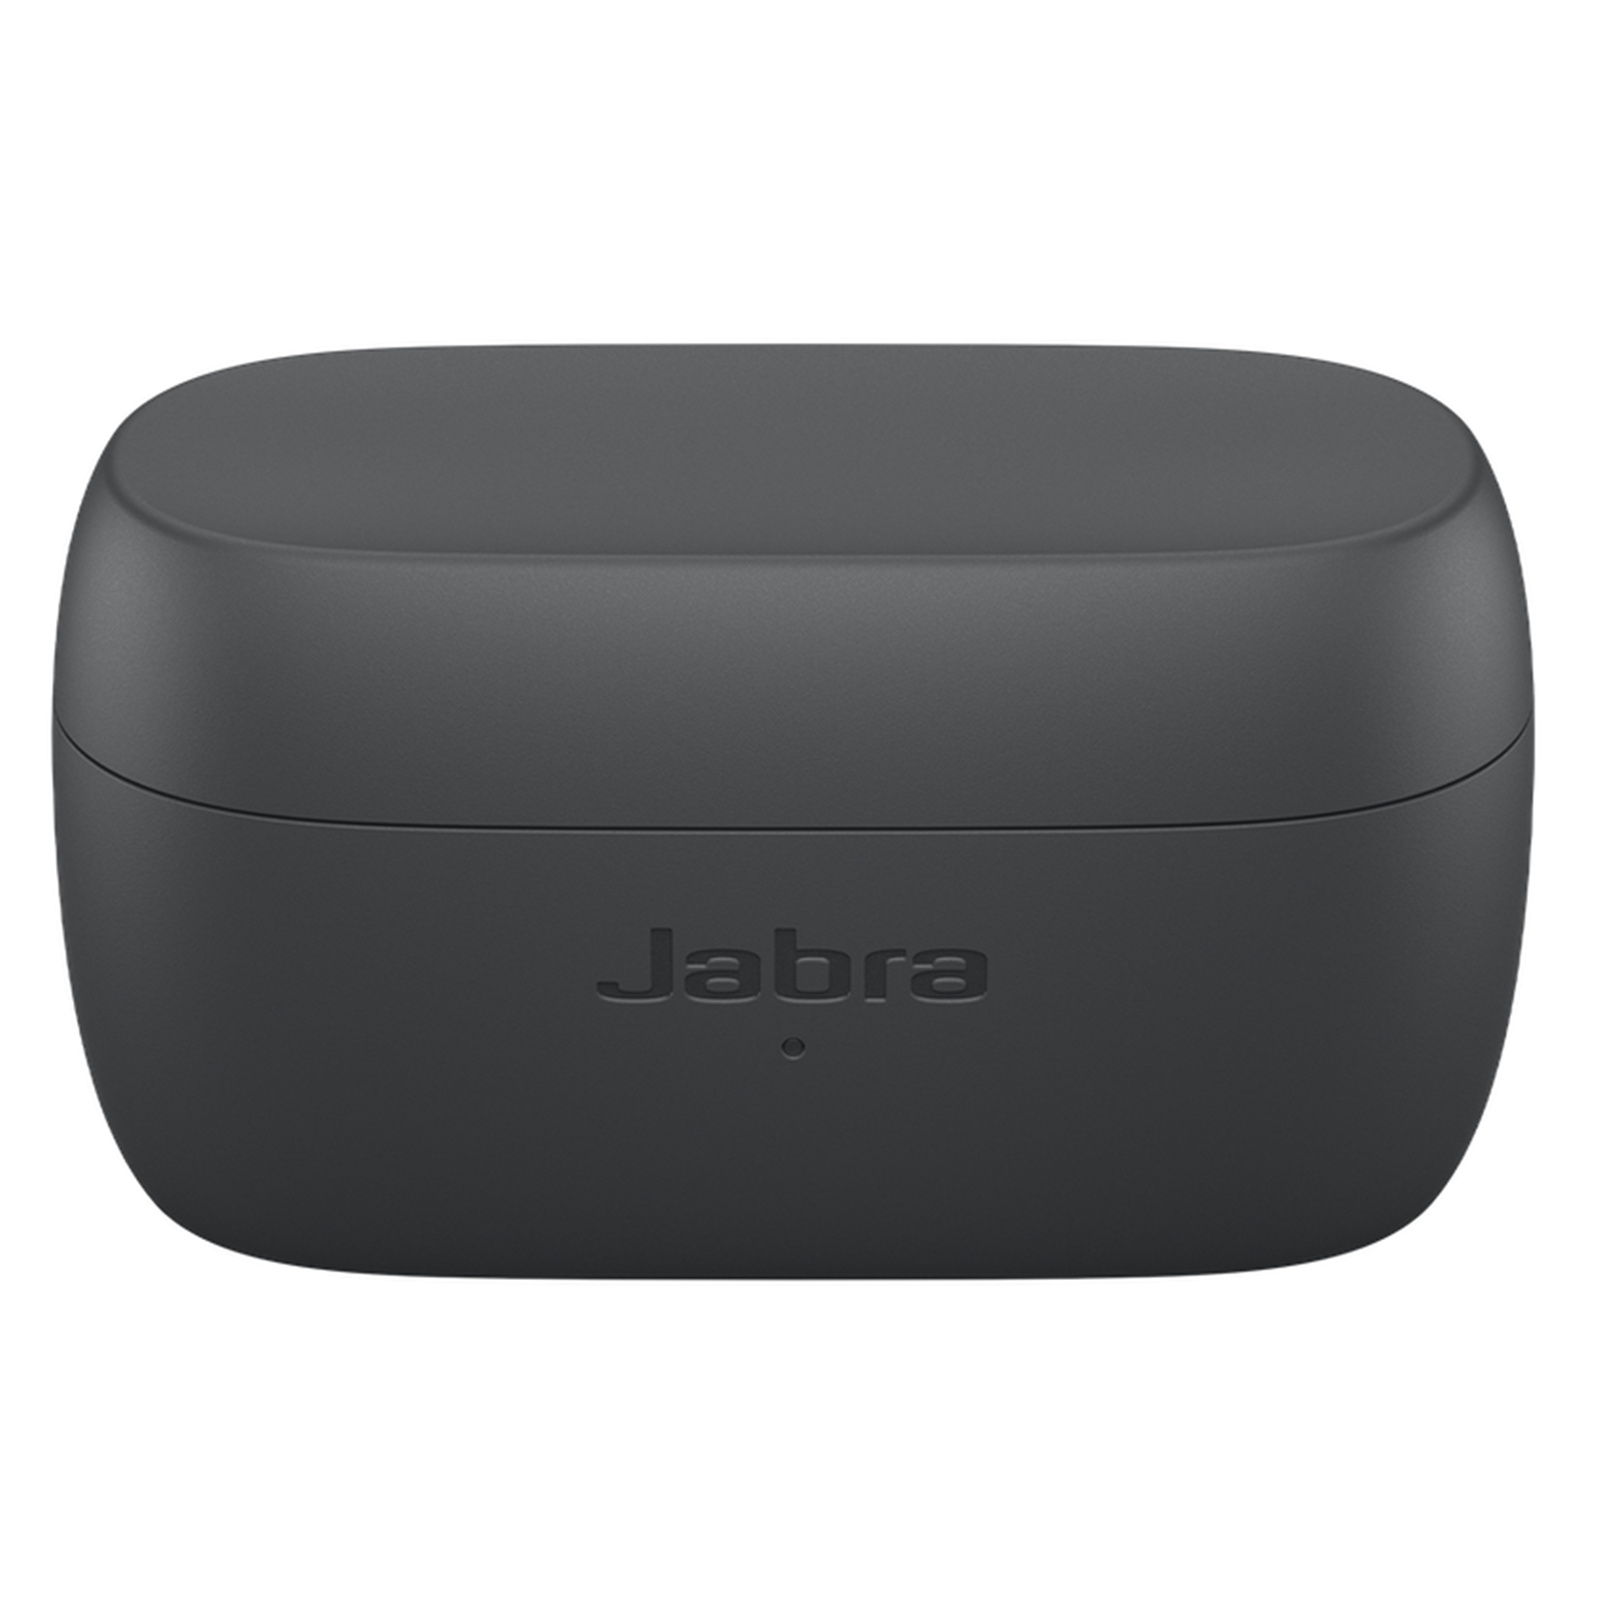 Jabra Elite USB-C Cable Lilac